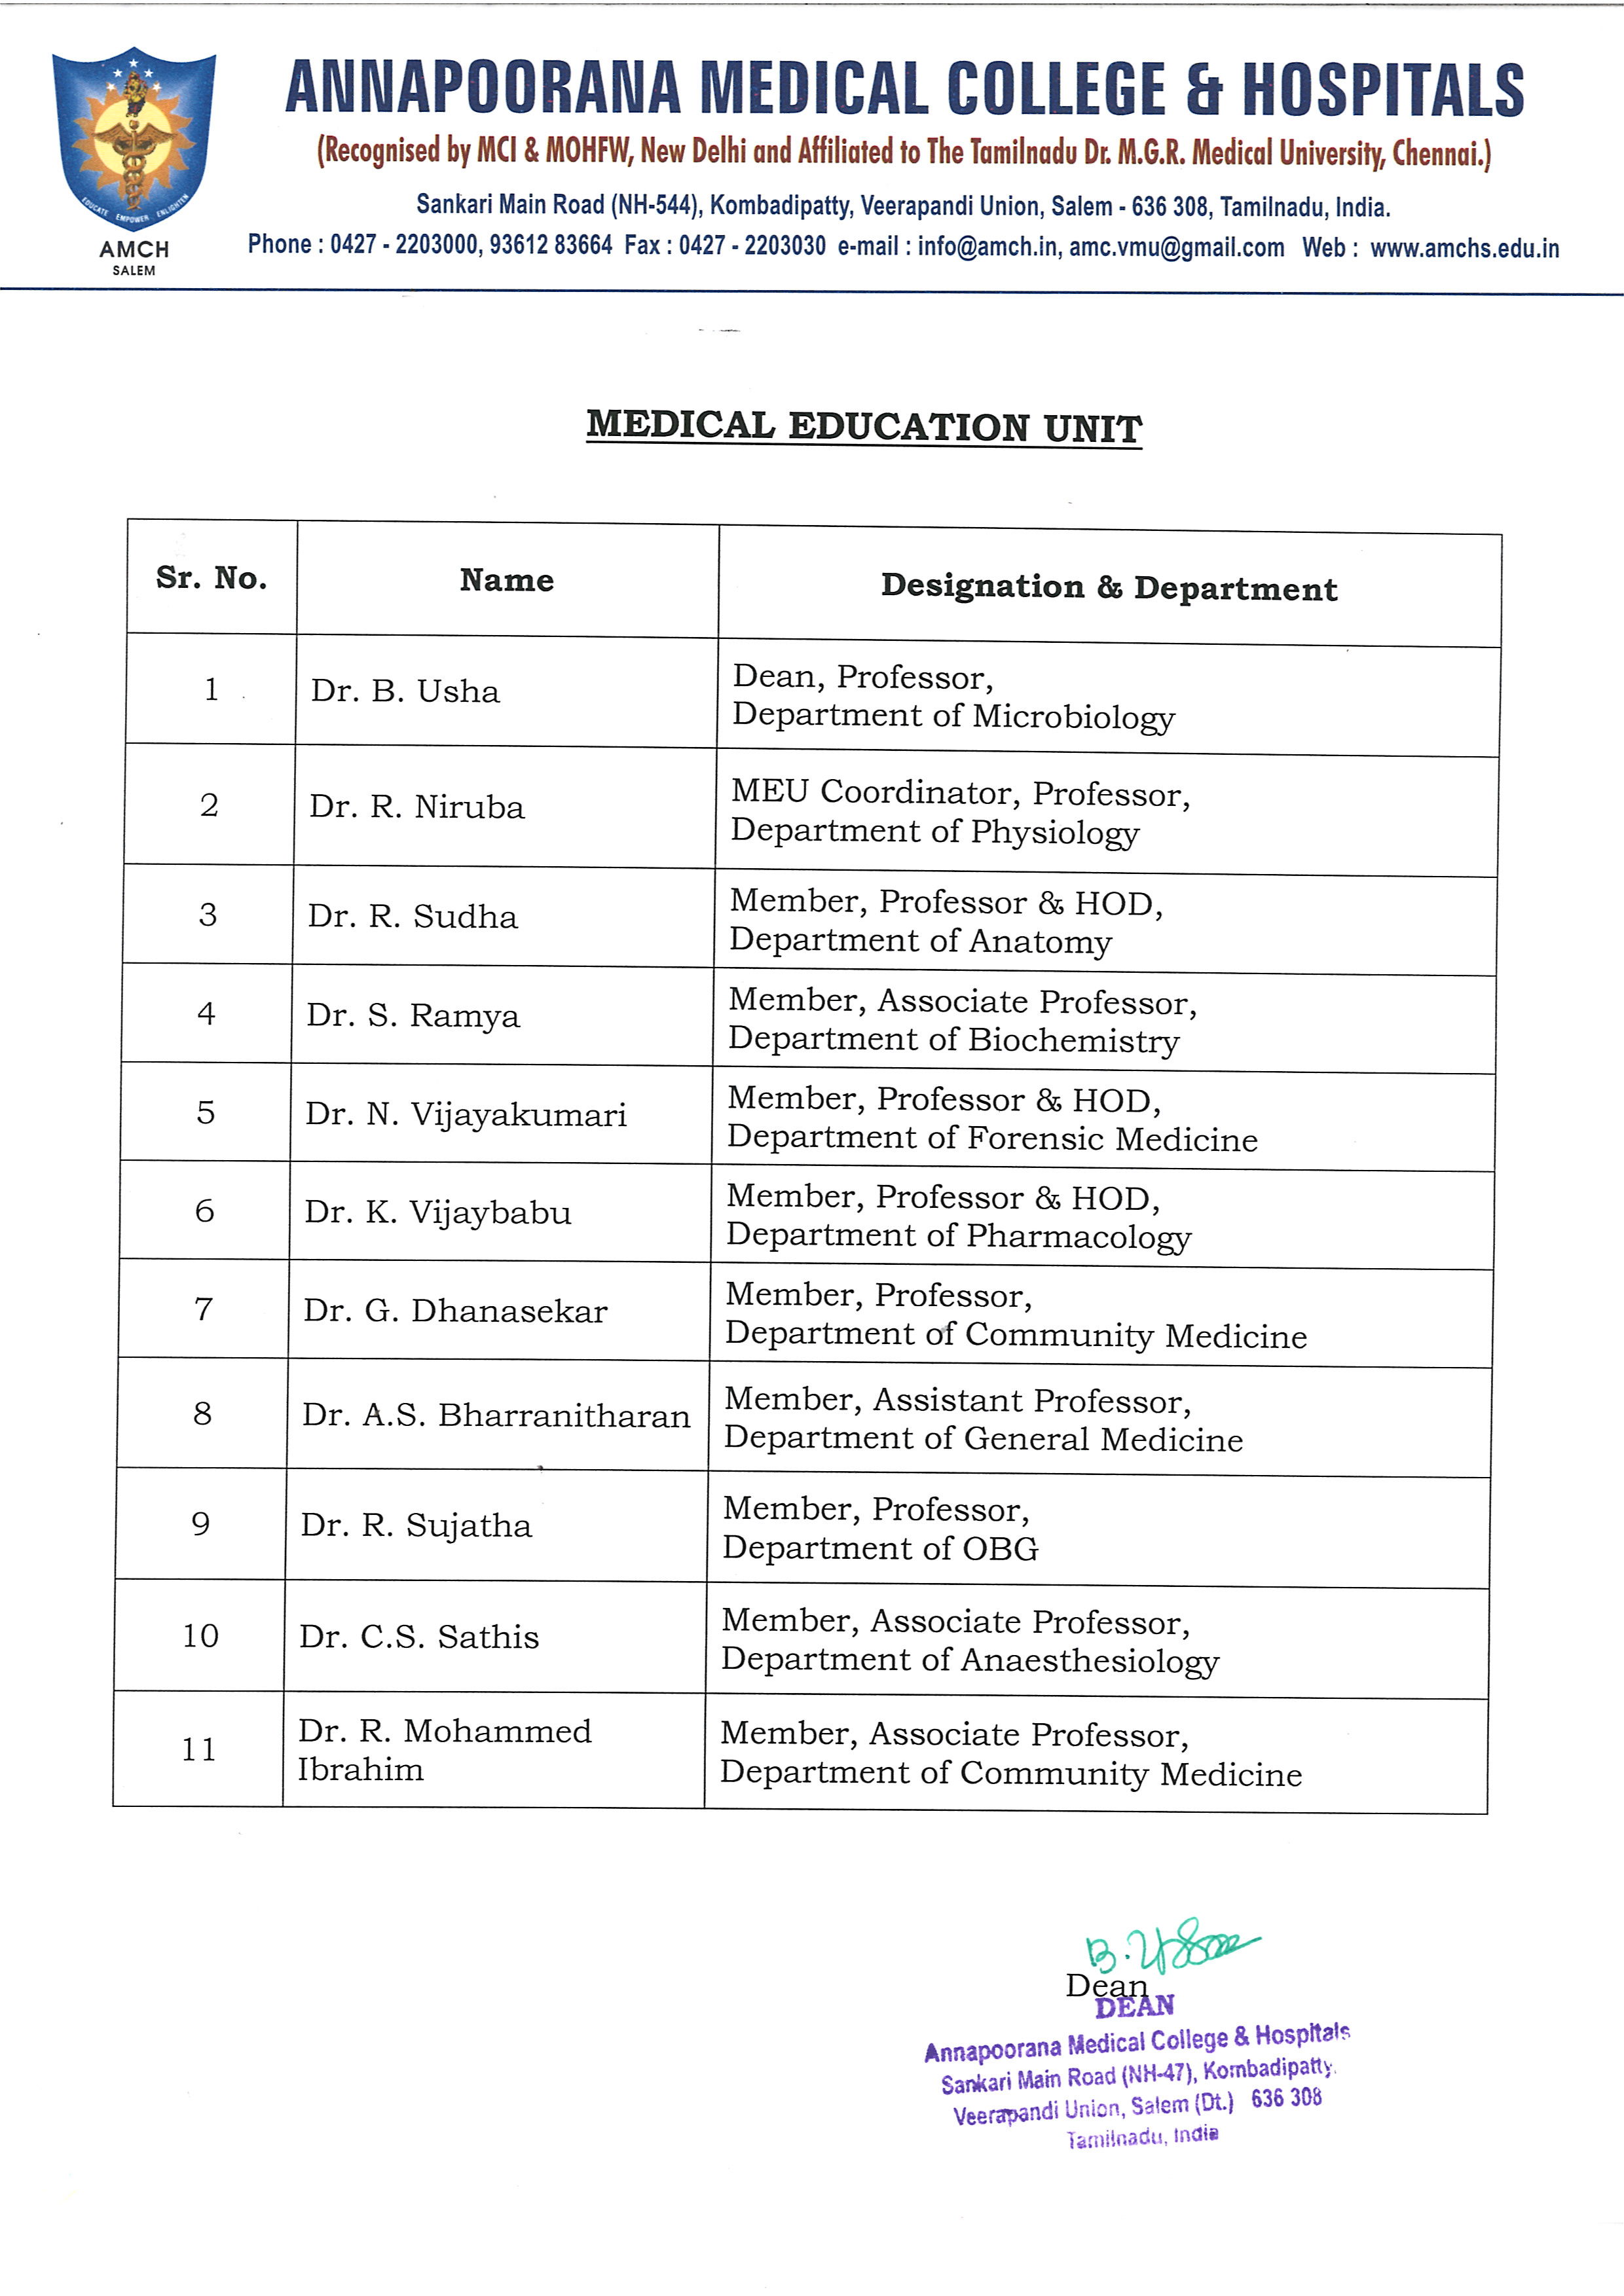 Medical Education Unit